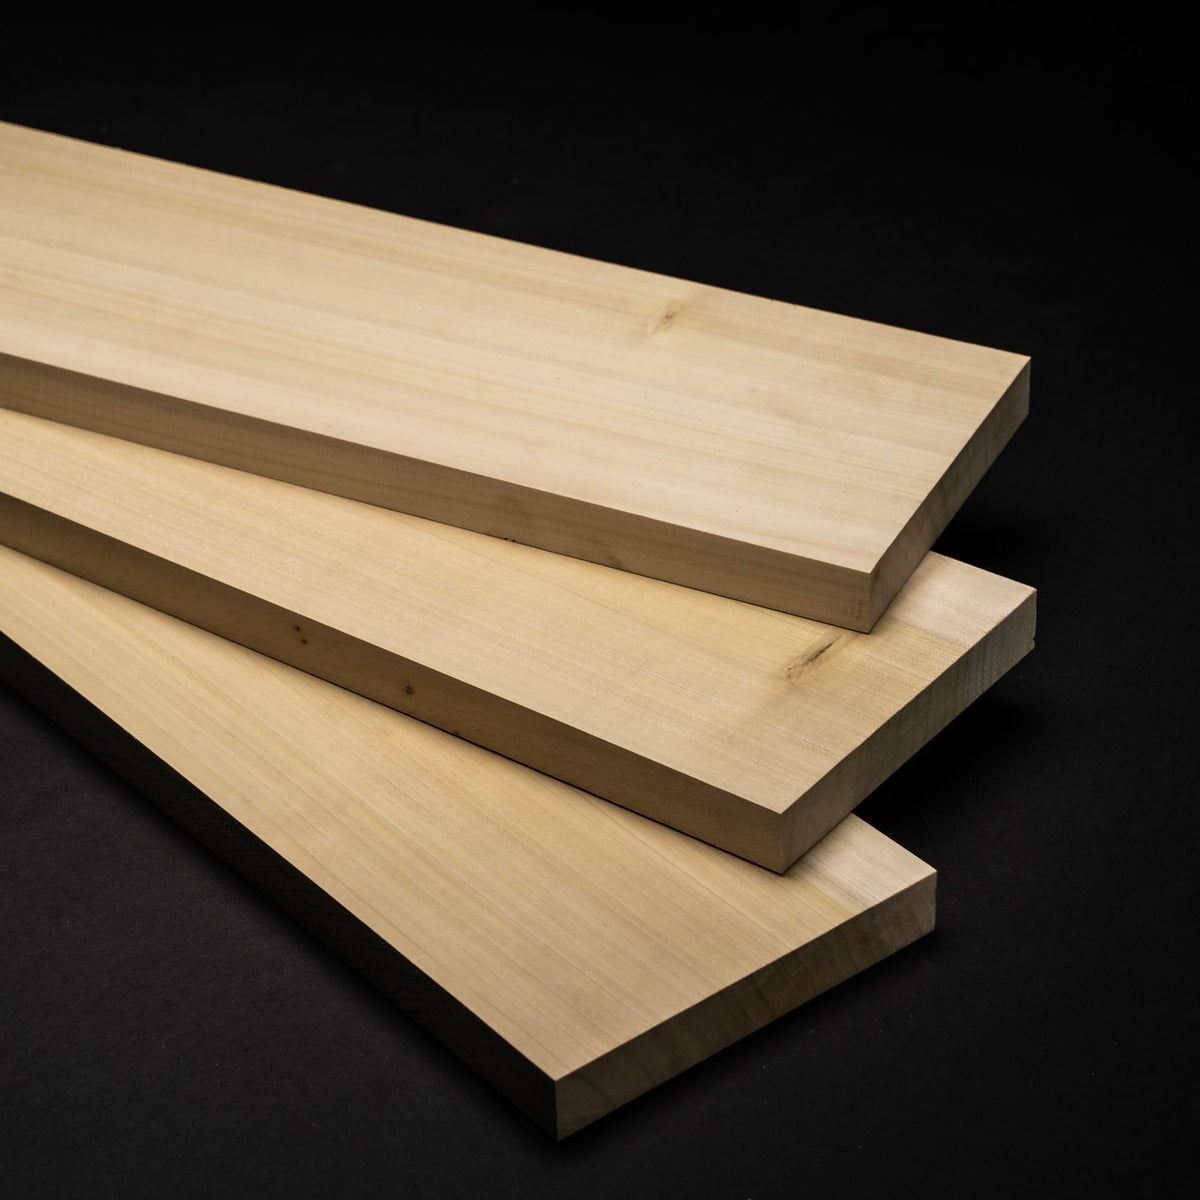 4/4 1” Poplar Boards - Kiln Dried Dimensional Lumber - Cut to Size Poplar Board